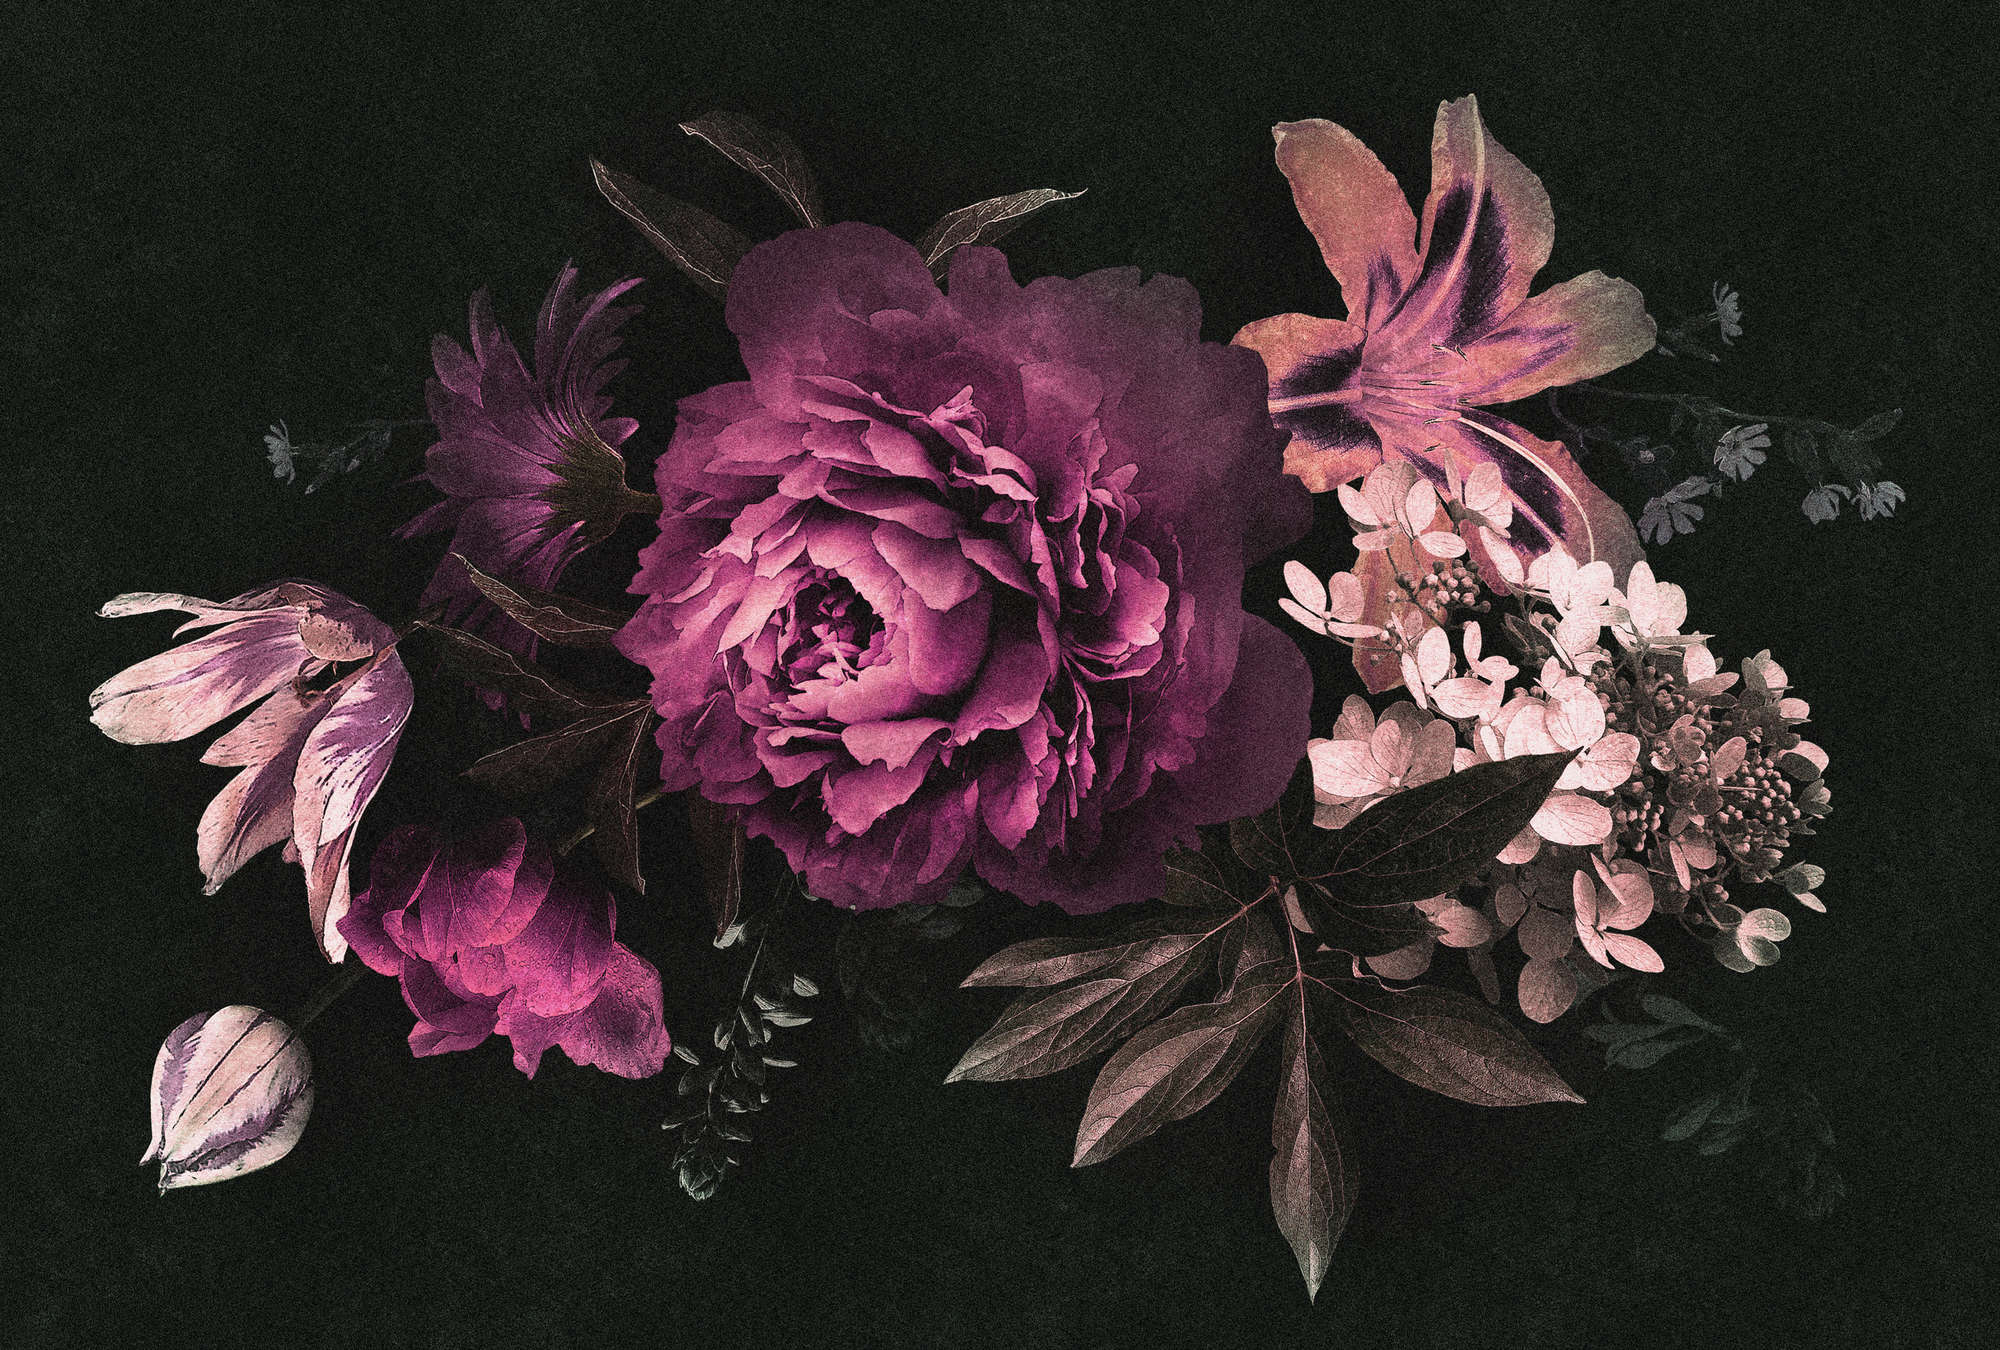             Drama queen 3 - Photo wallpaper romantic bouquet of flowers - Cardboard structure - Pink, Black | Matt smooth fleece
        